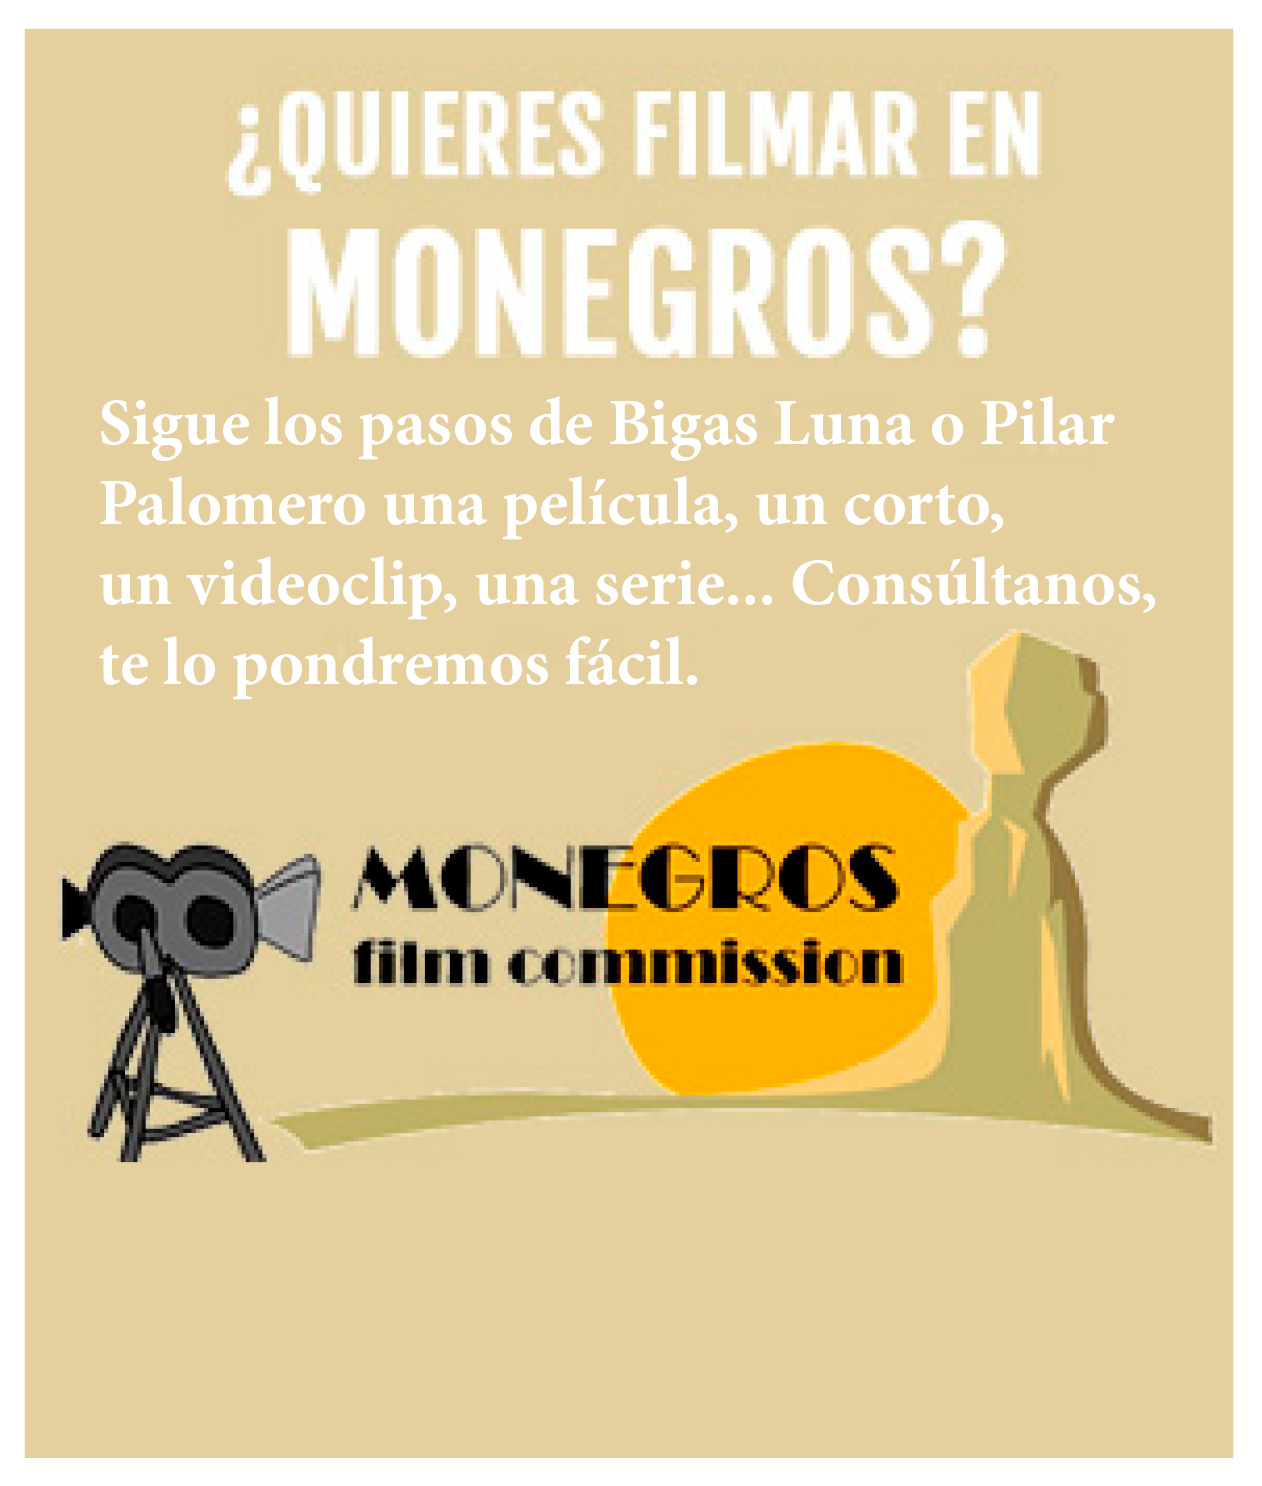 Monegros Film Commission